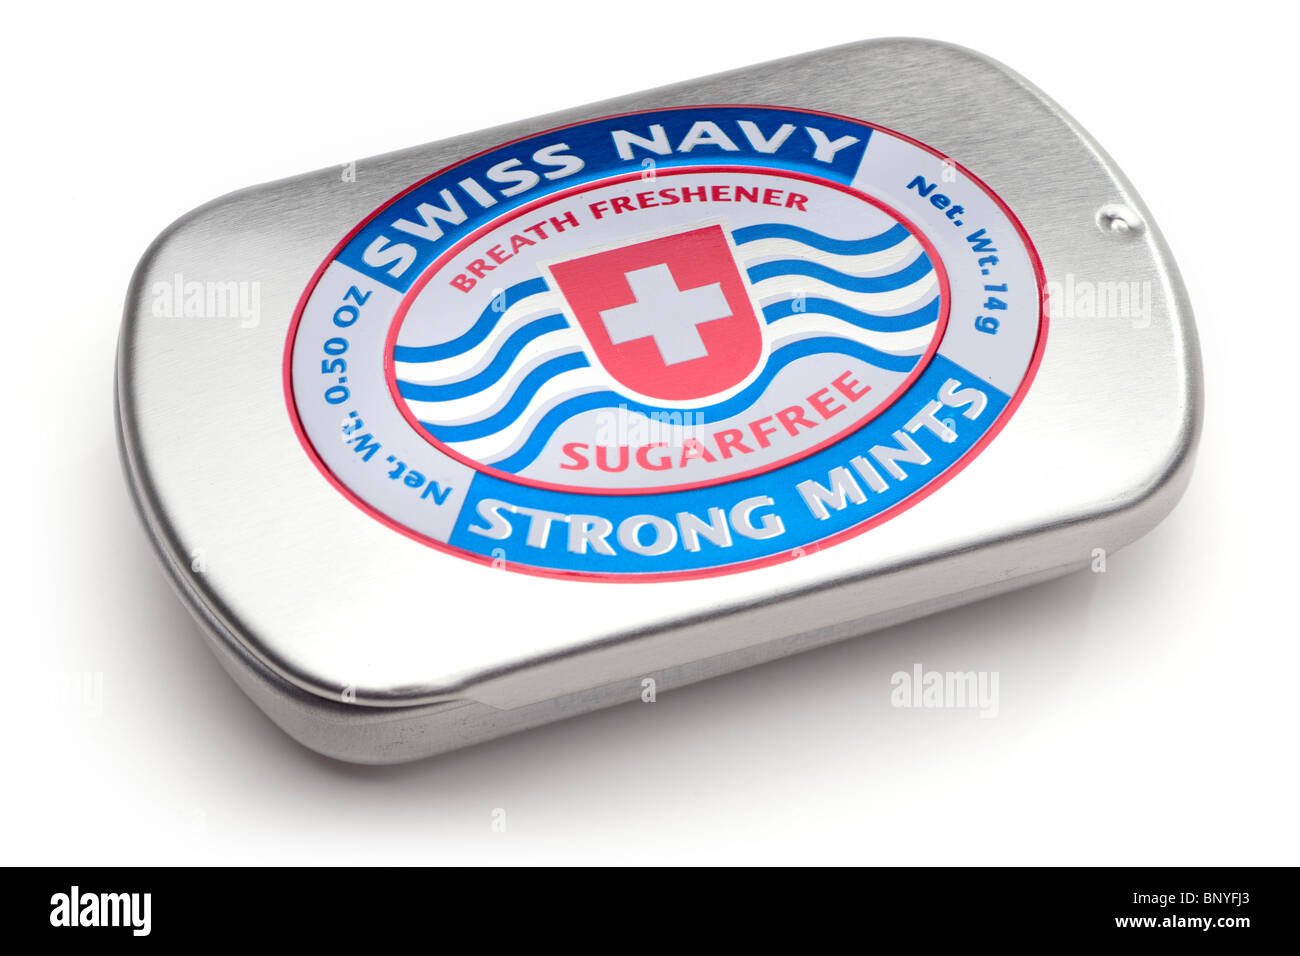 Silver tin of Swiss Navy Breath freshener sugarfree strong travel mints Stock Photo